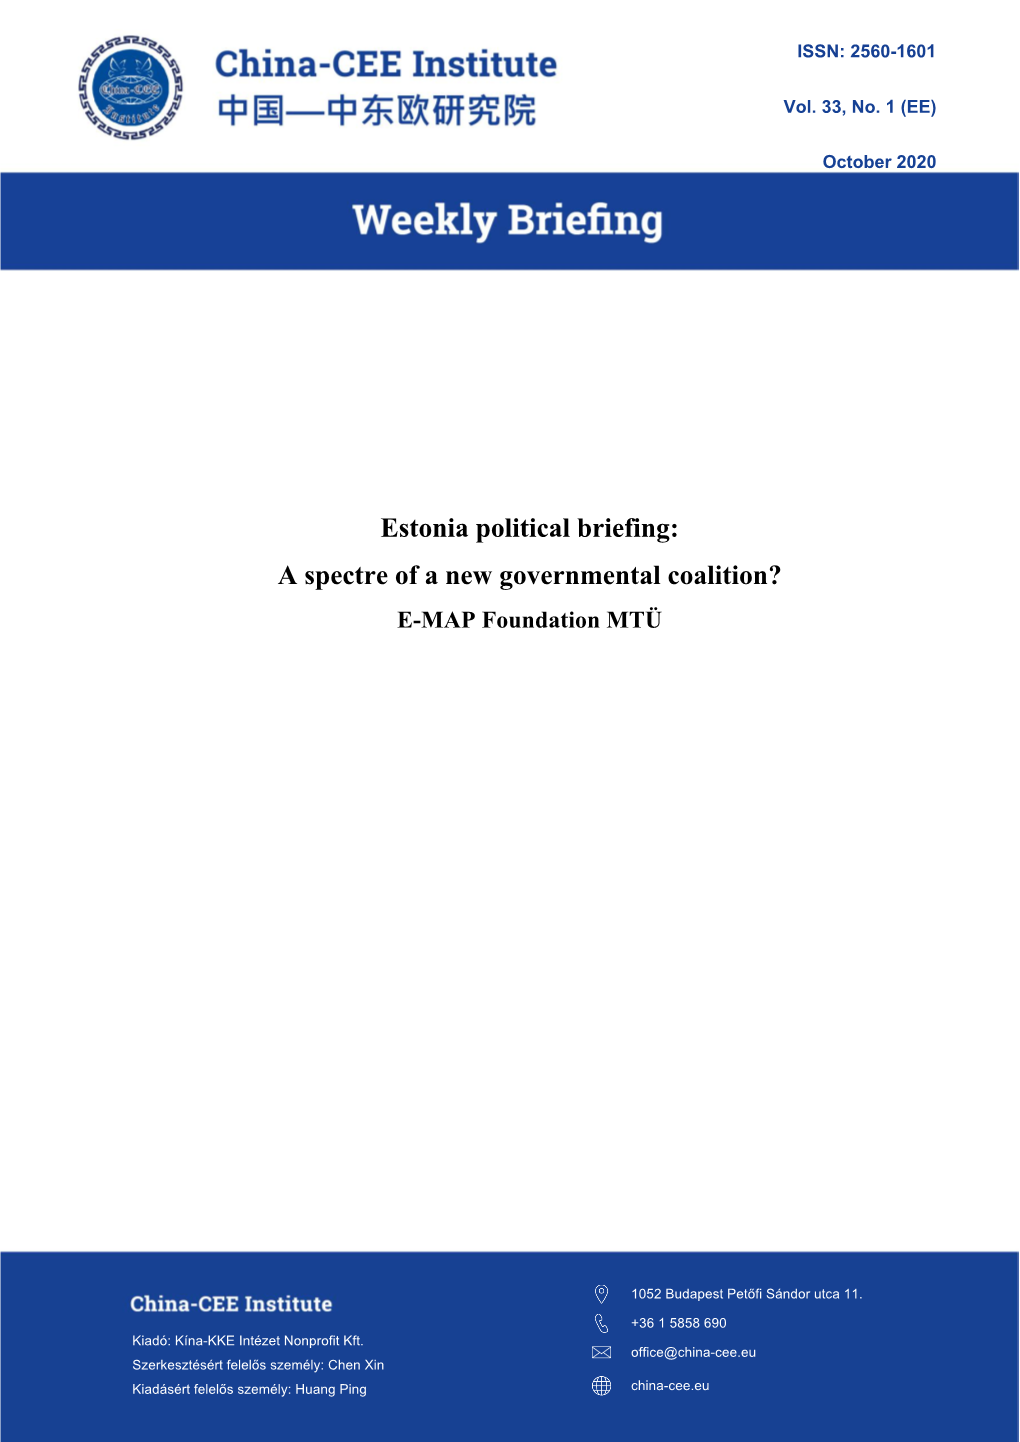 Estonia Political Briefing: a Spectre of a New Governmental Coalition? E-MAP Foundation MTÜ